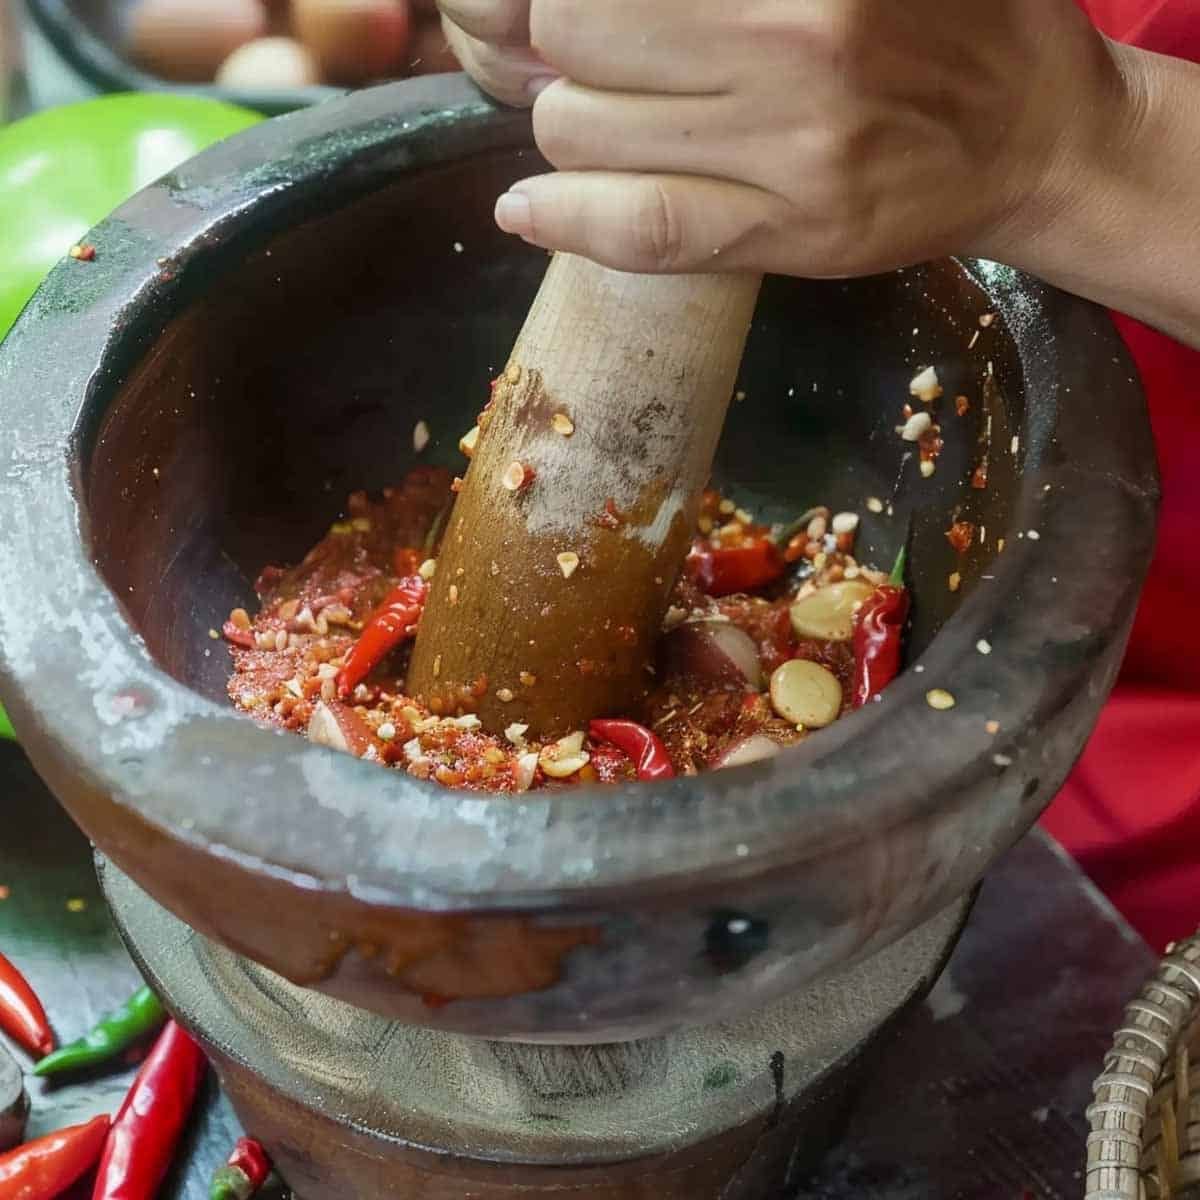 Mortar and pestalgrinding garlic and thai chili peppers